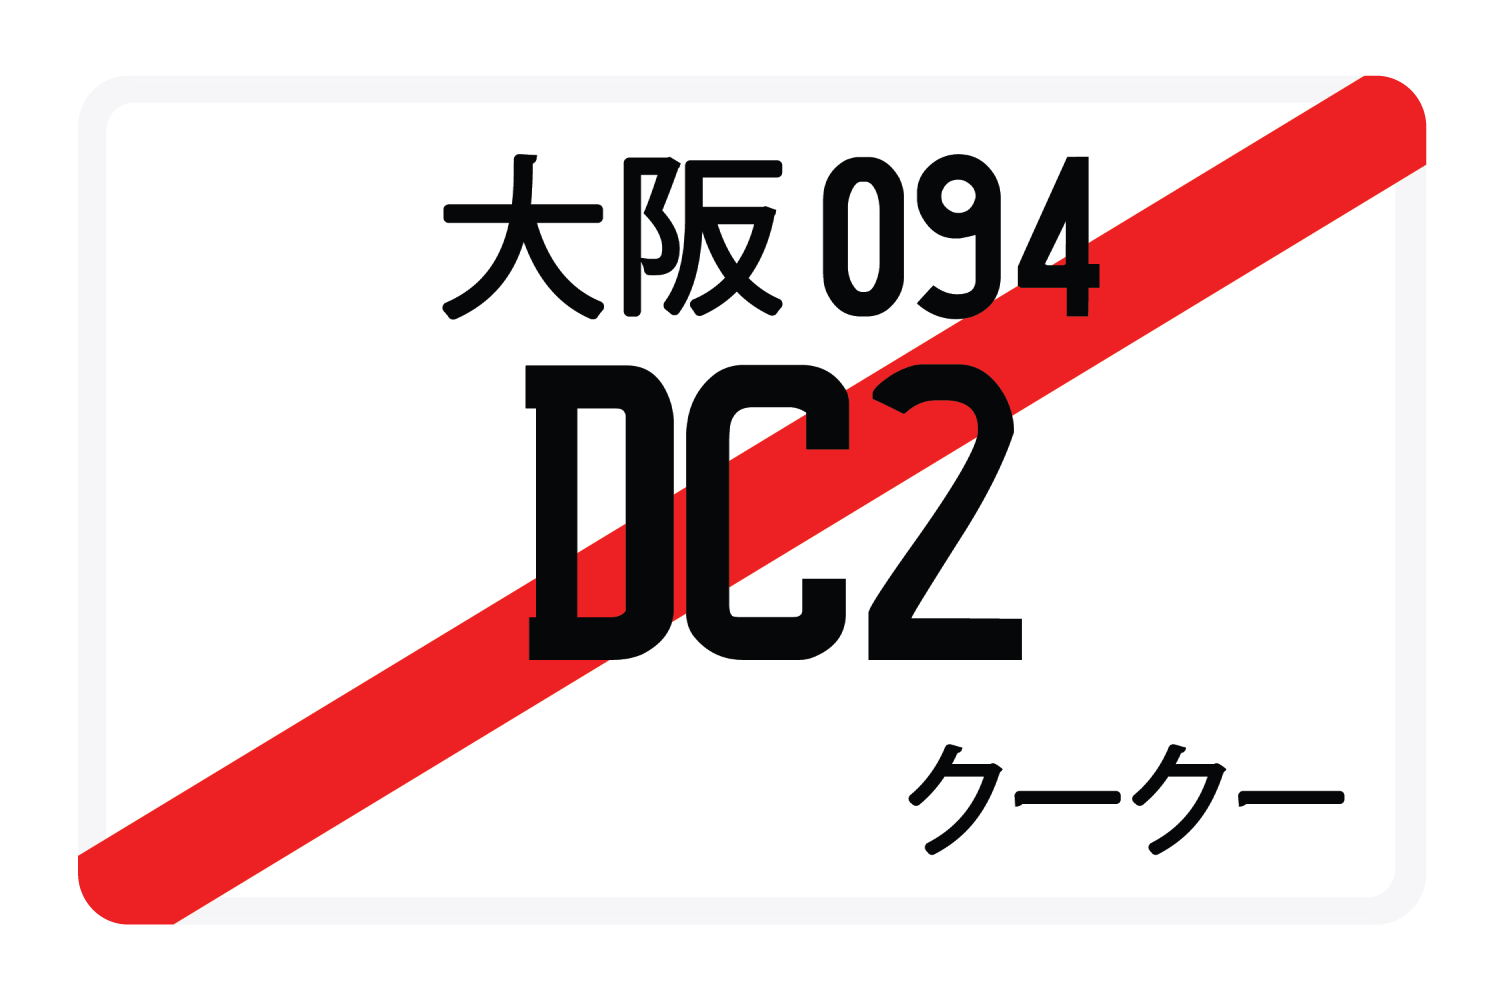 DC2